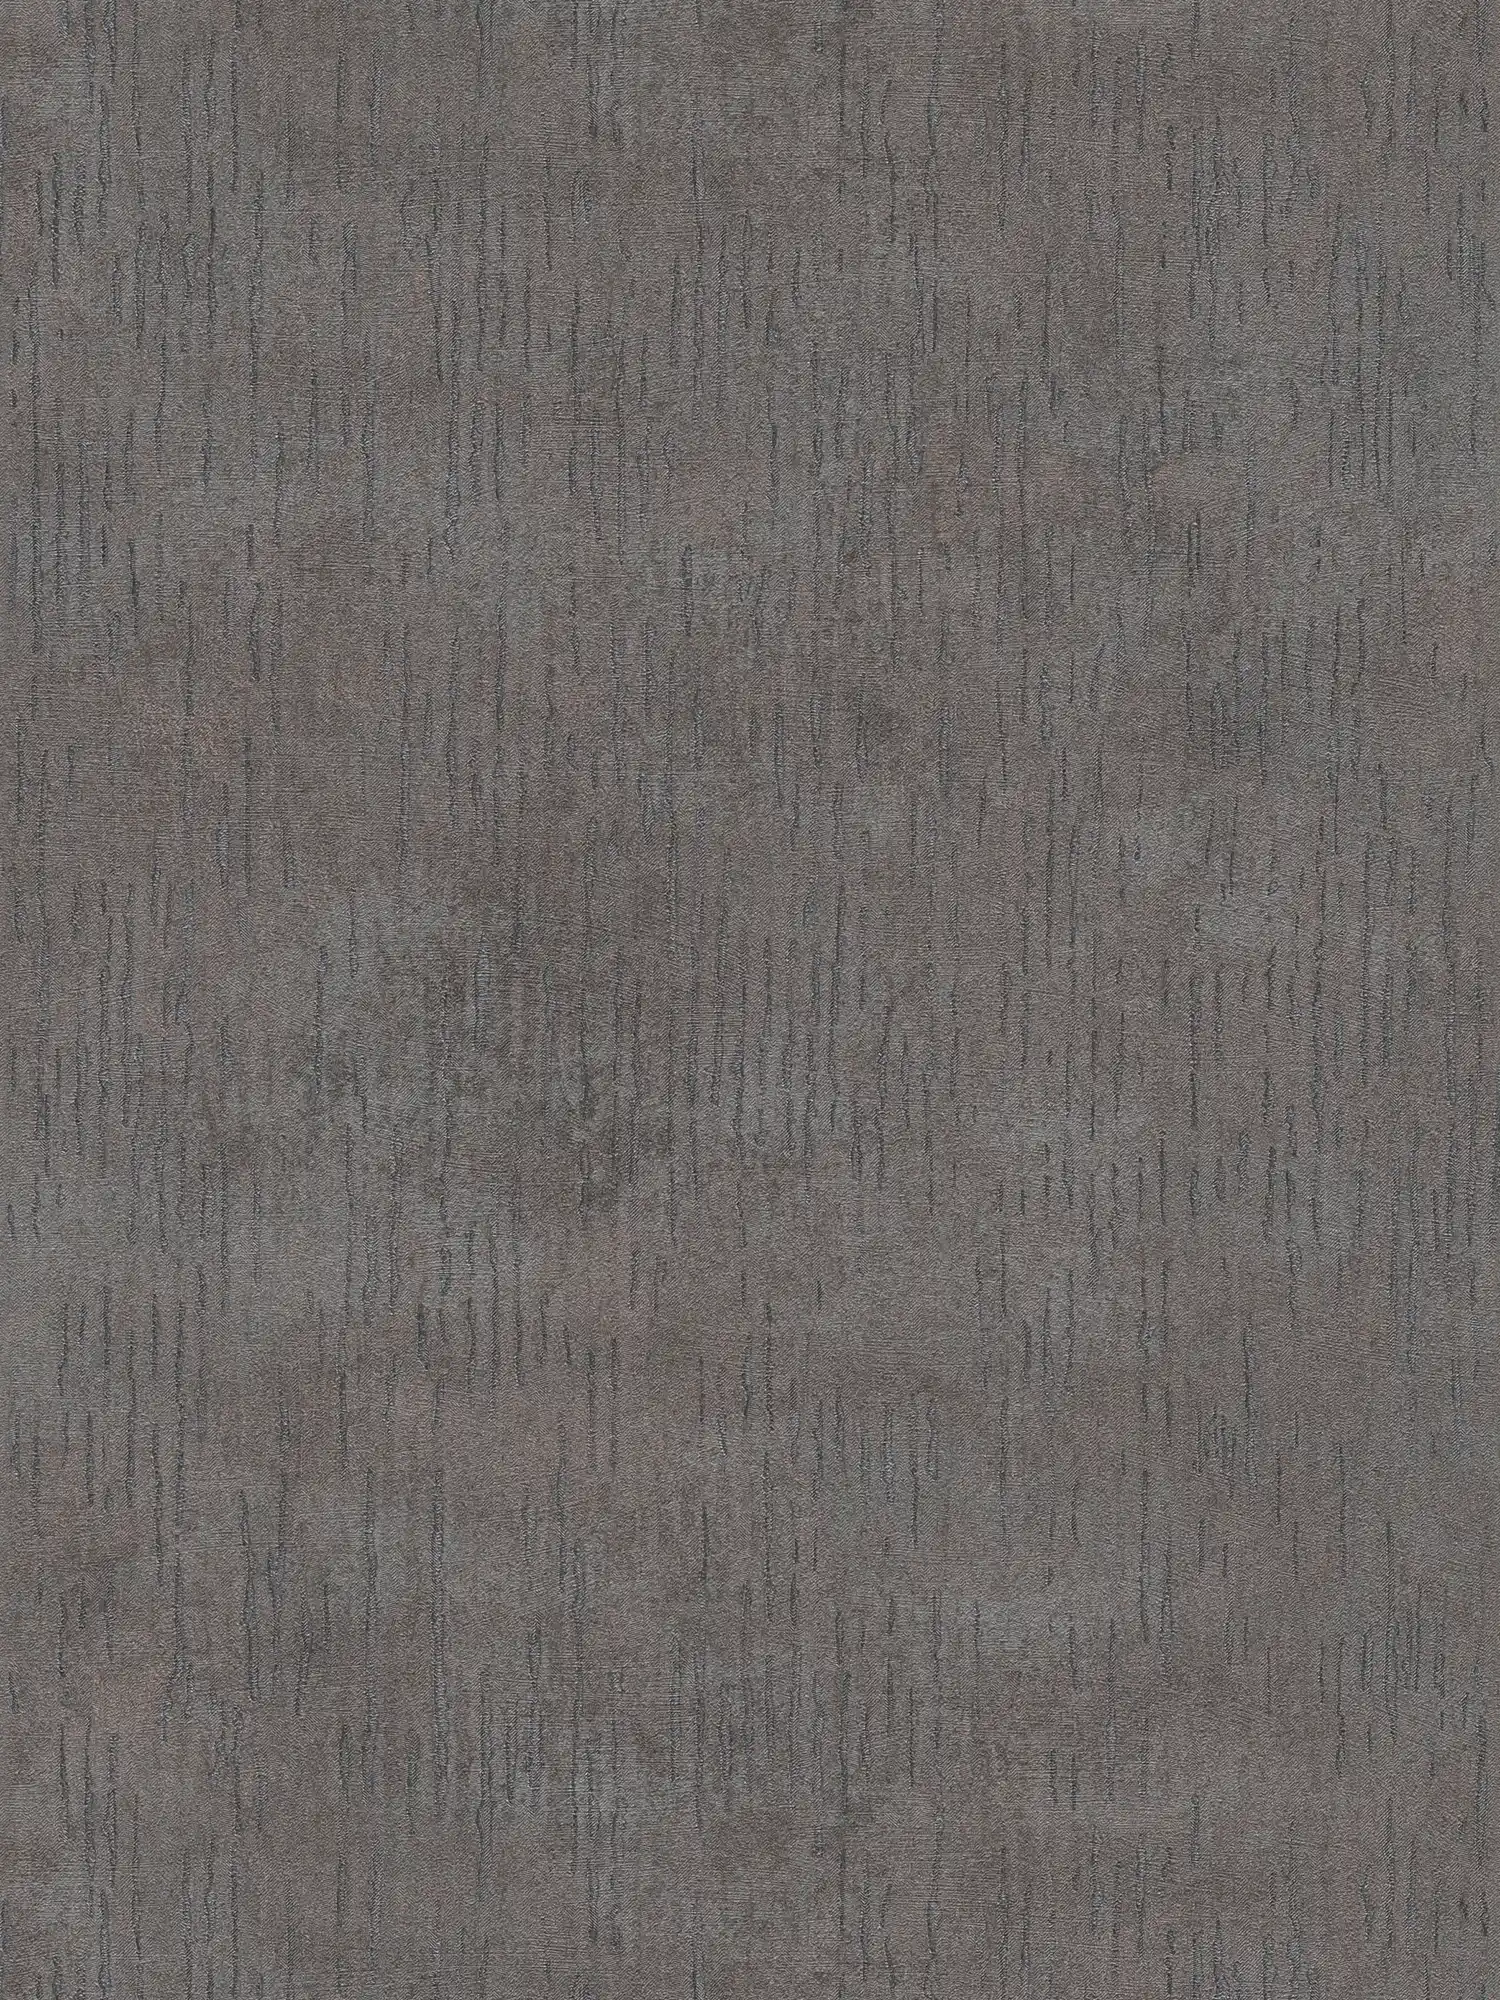 Plain wallpaper anthracite with metallic look - grey, metallic, black
